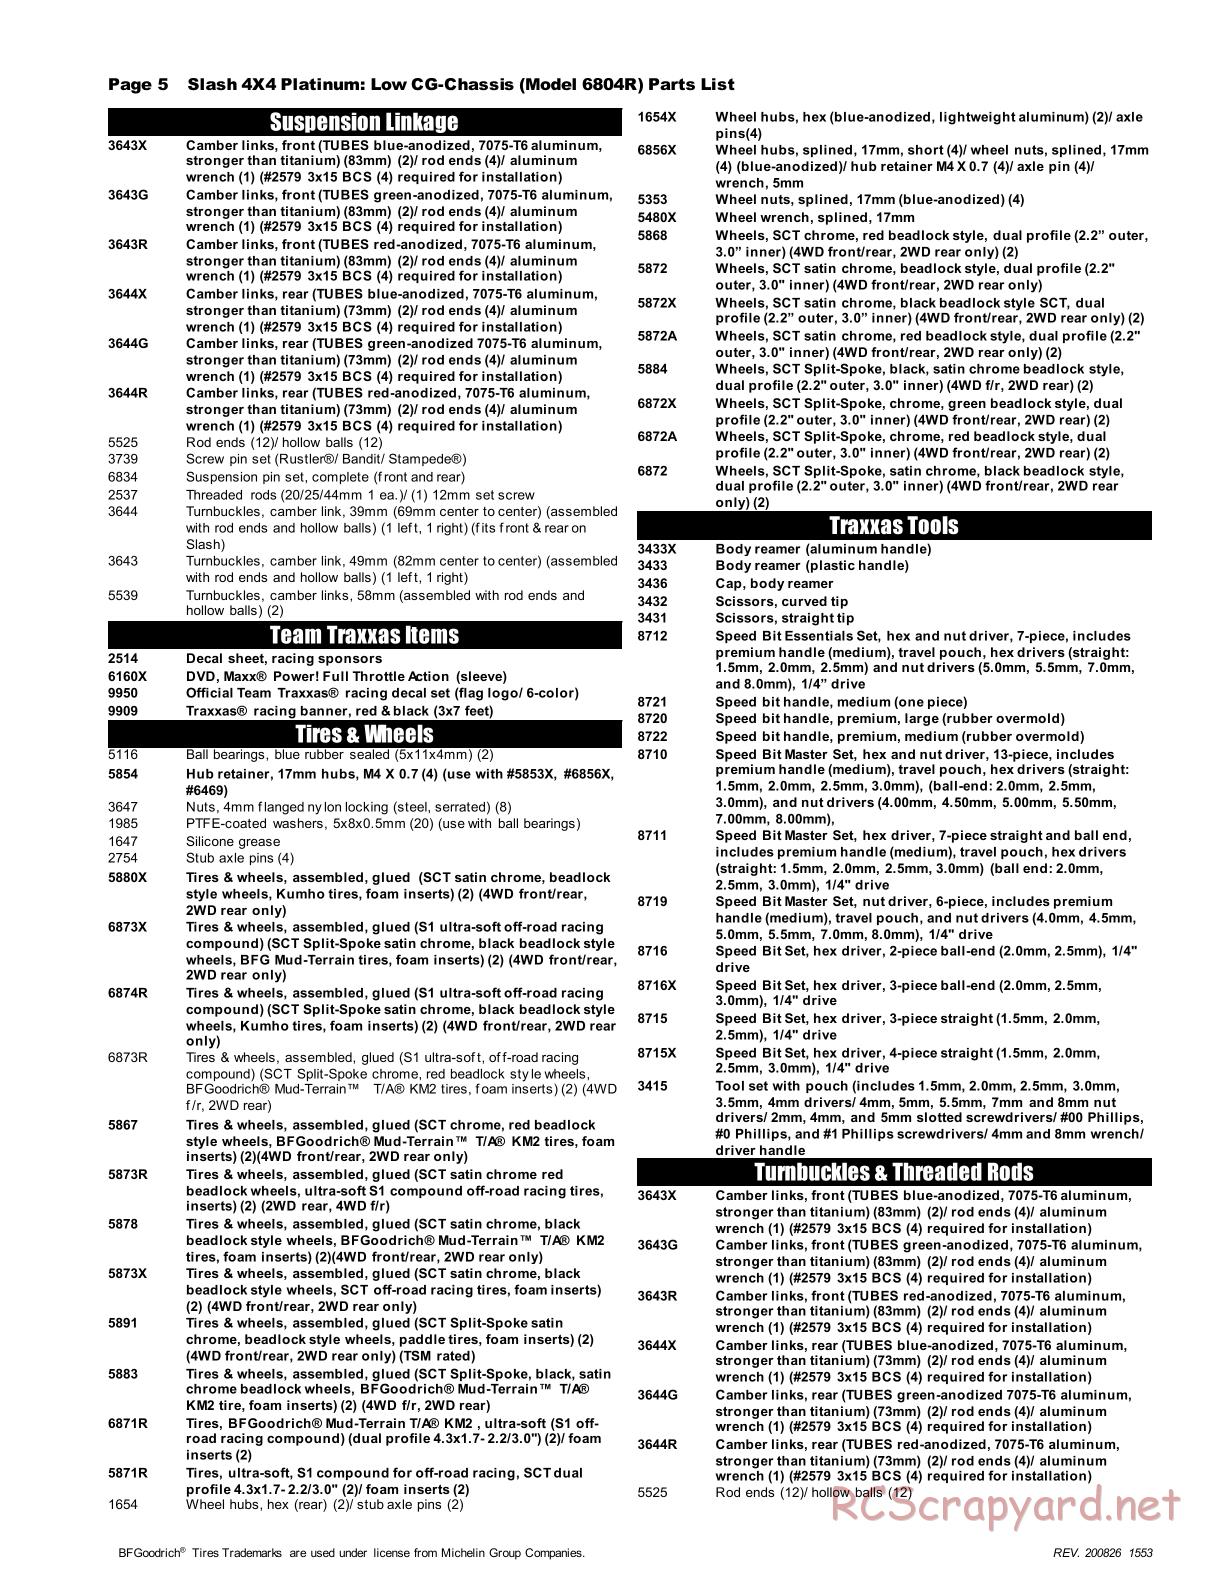 Traxxas - Slash 4x4 Platinum Ed (2012) - Parts List - Page 5